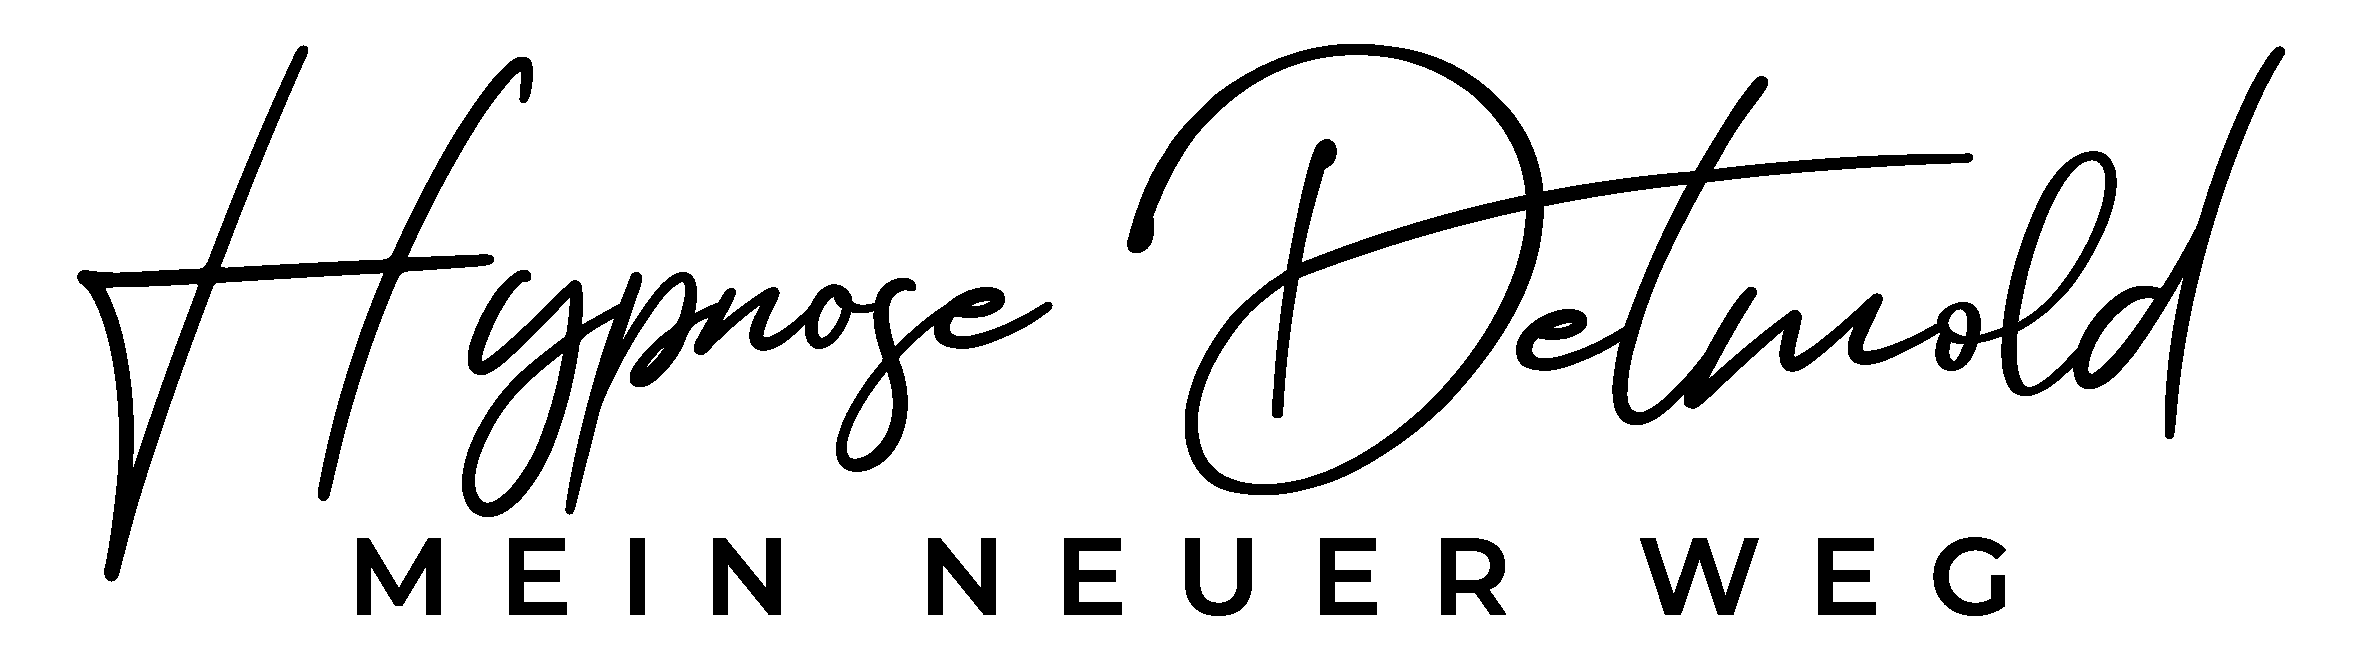 Logo Hypnose Detmold